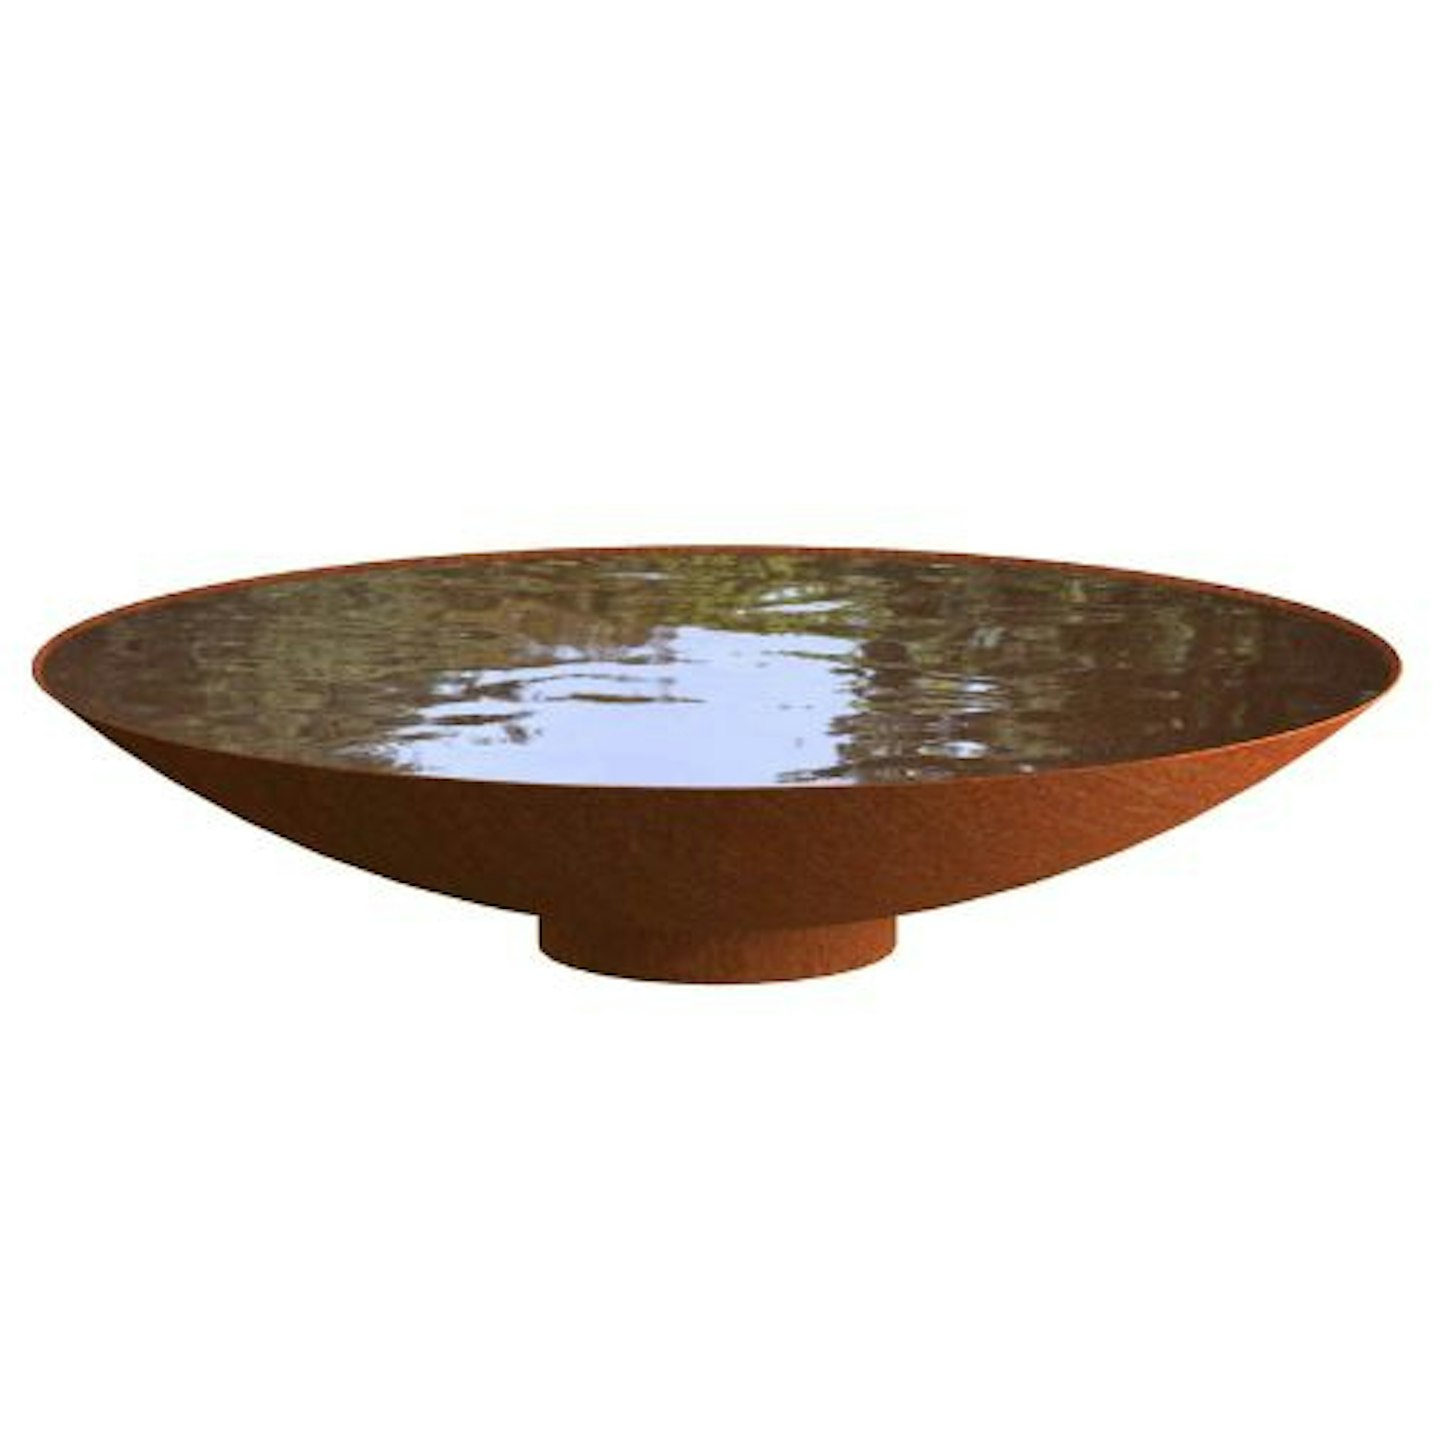 Corten Steel Water Bowl by Adezz